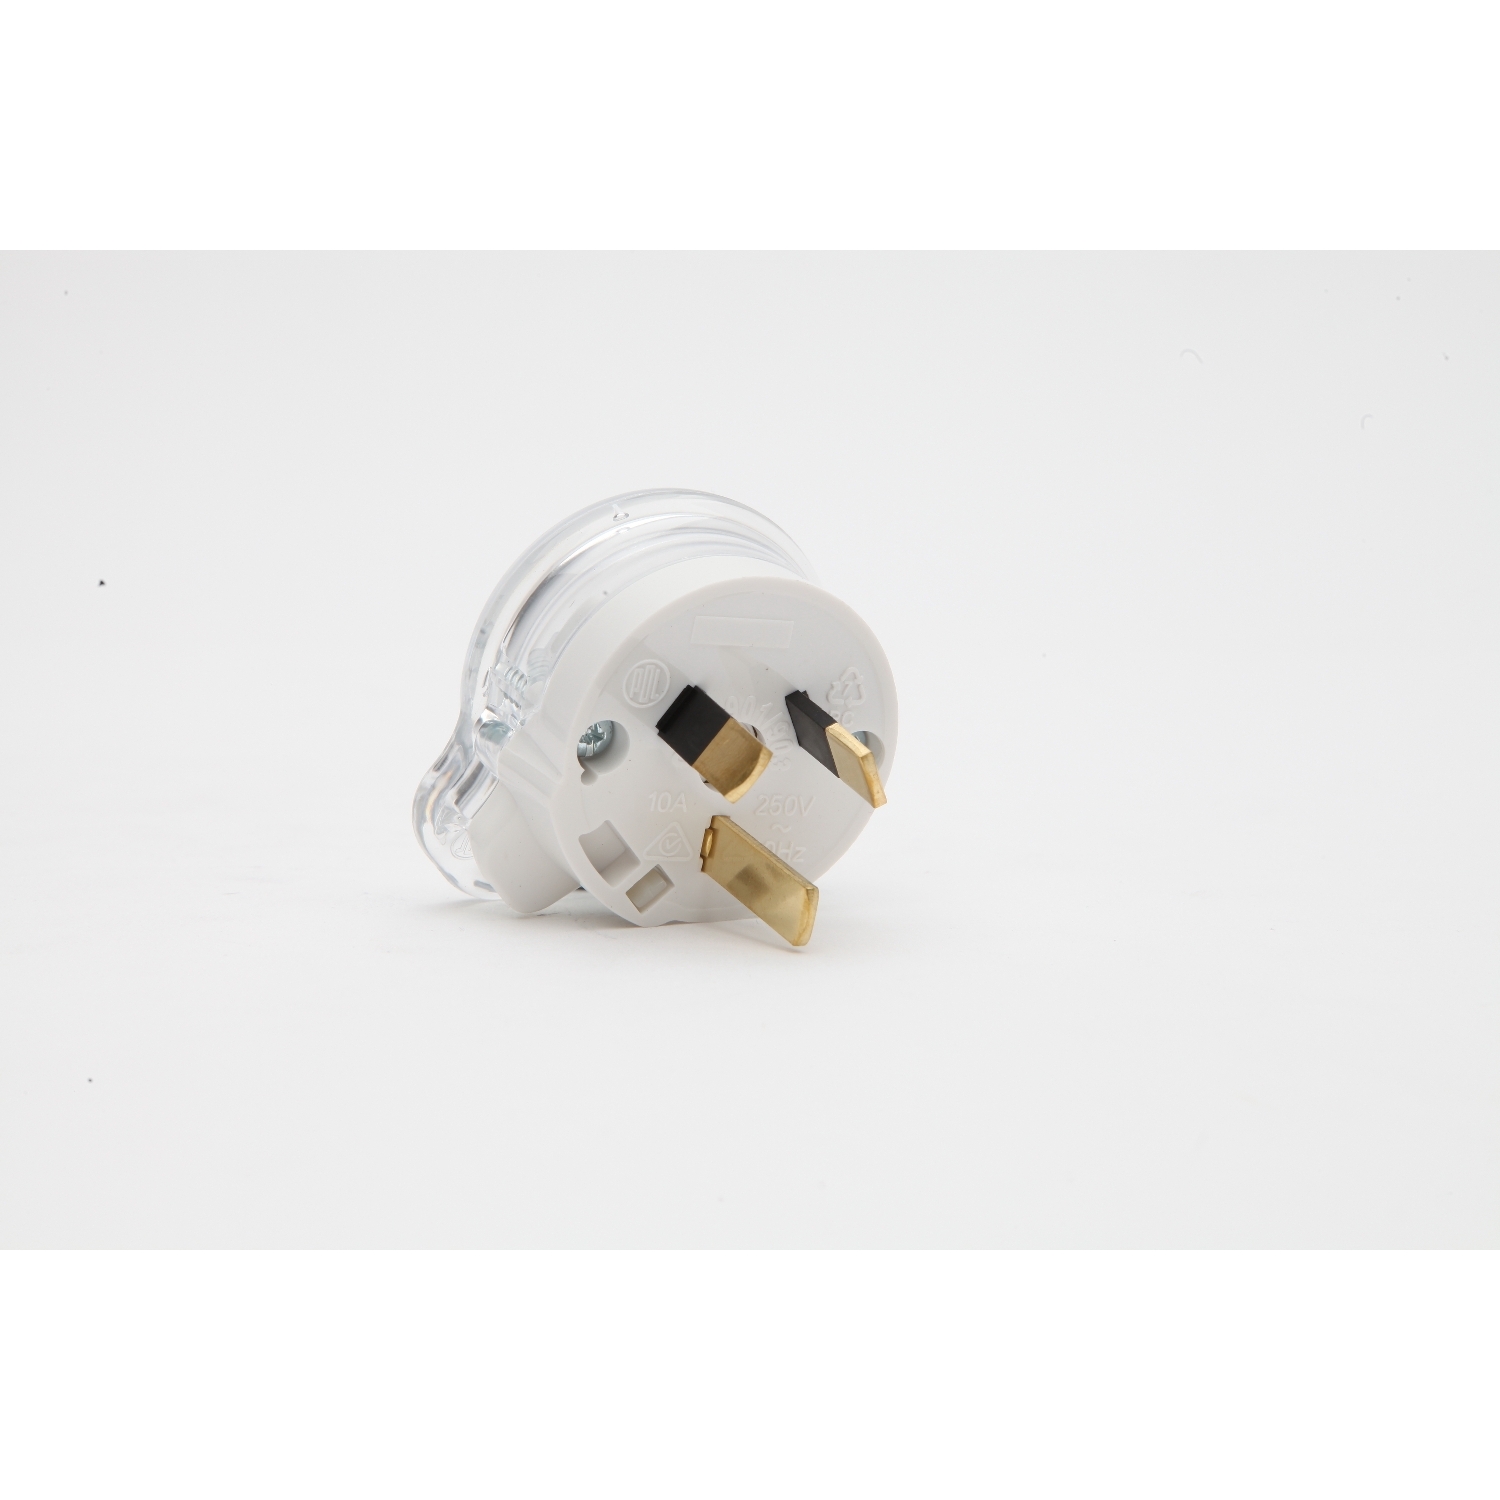 PDL Side Entry 3Pin Rewirable Heavy Duty Plug; 10A - Choose Colour - 